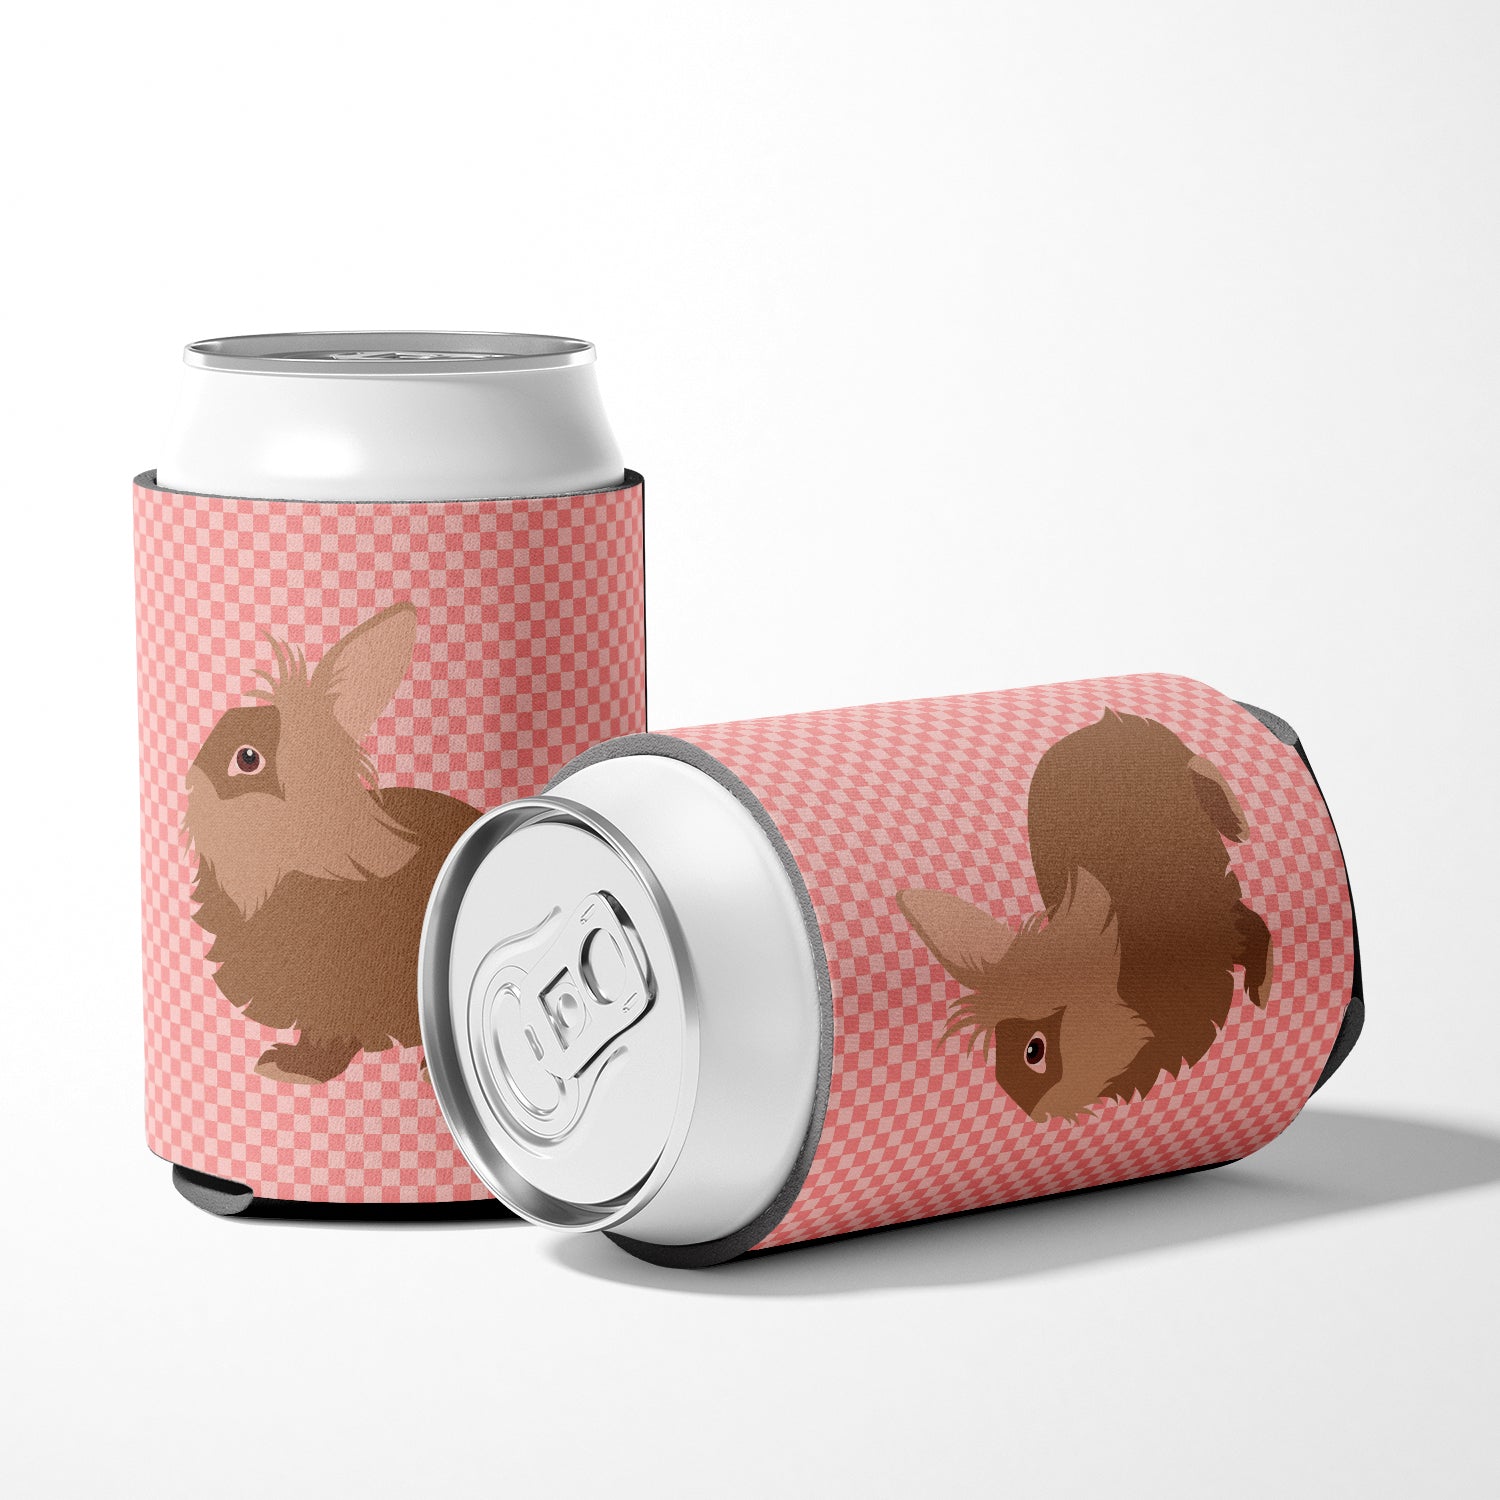 Lionhead Rabbit Pink Check Can or Bottle Hugger BB7960CC